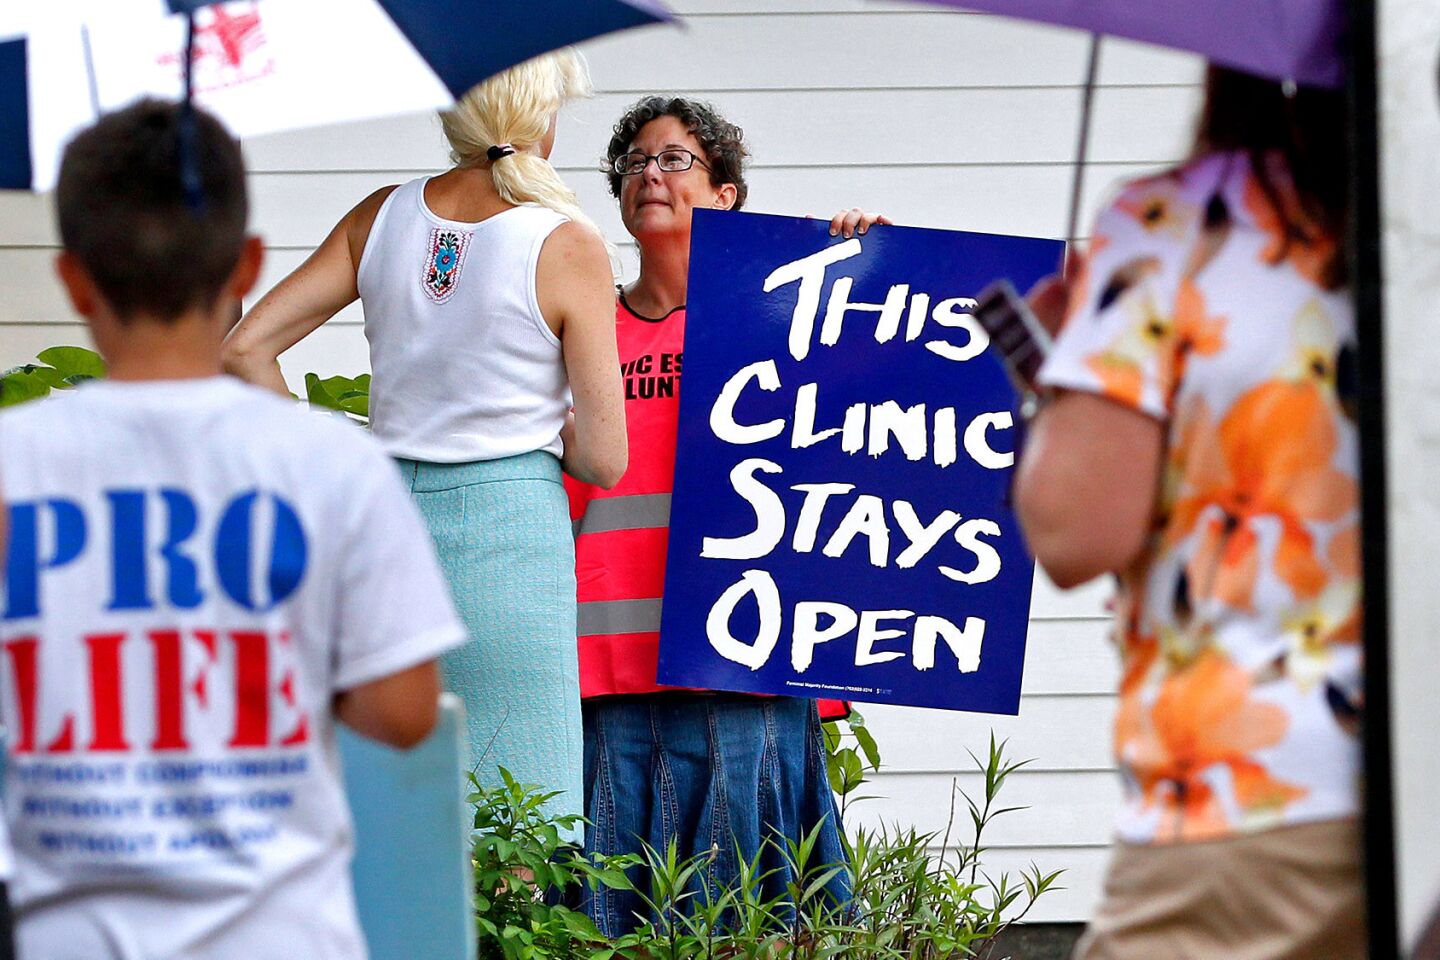 Abortion opponents in Louisiana